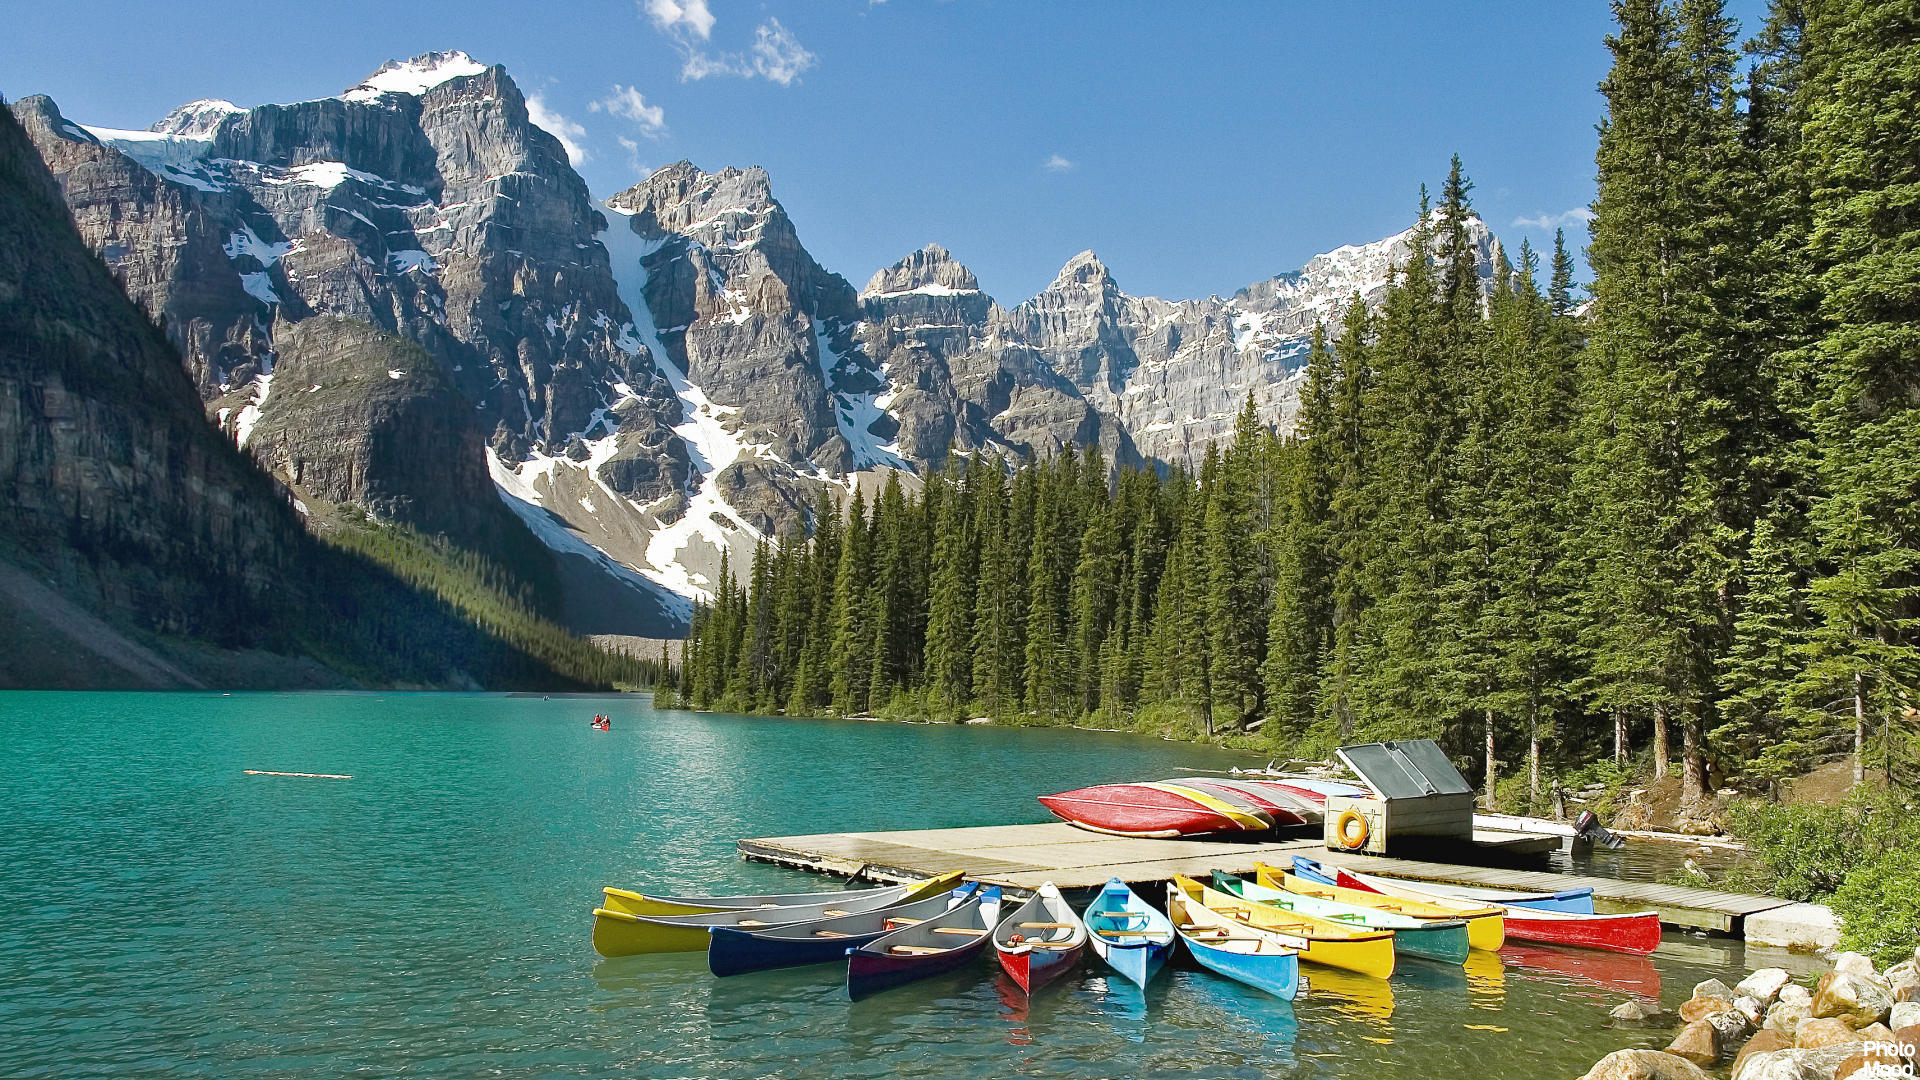 89 Photo Mood Moraine Lake Boat Banff National Park Alberta Canada